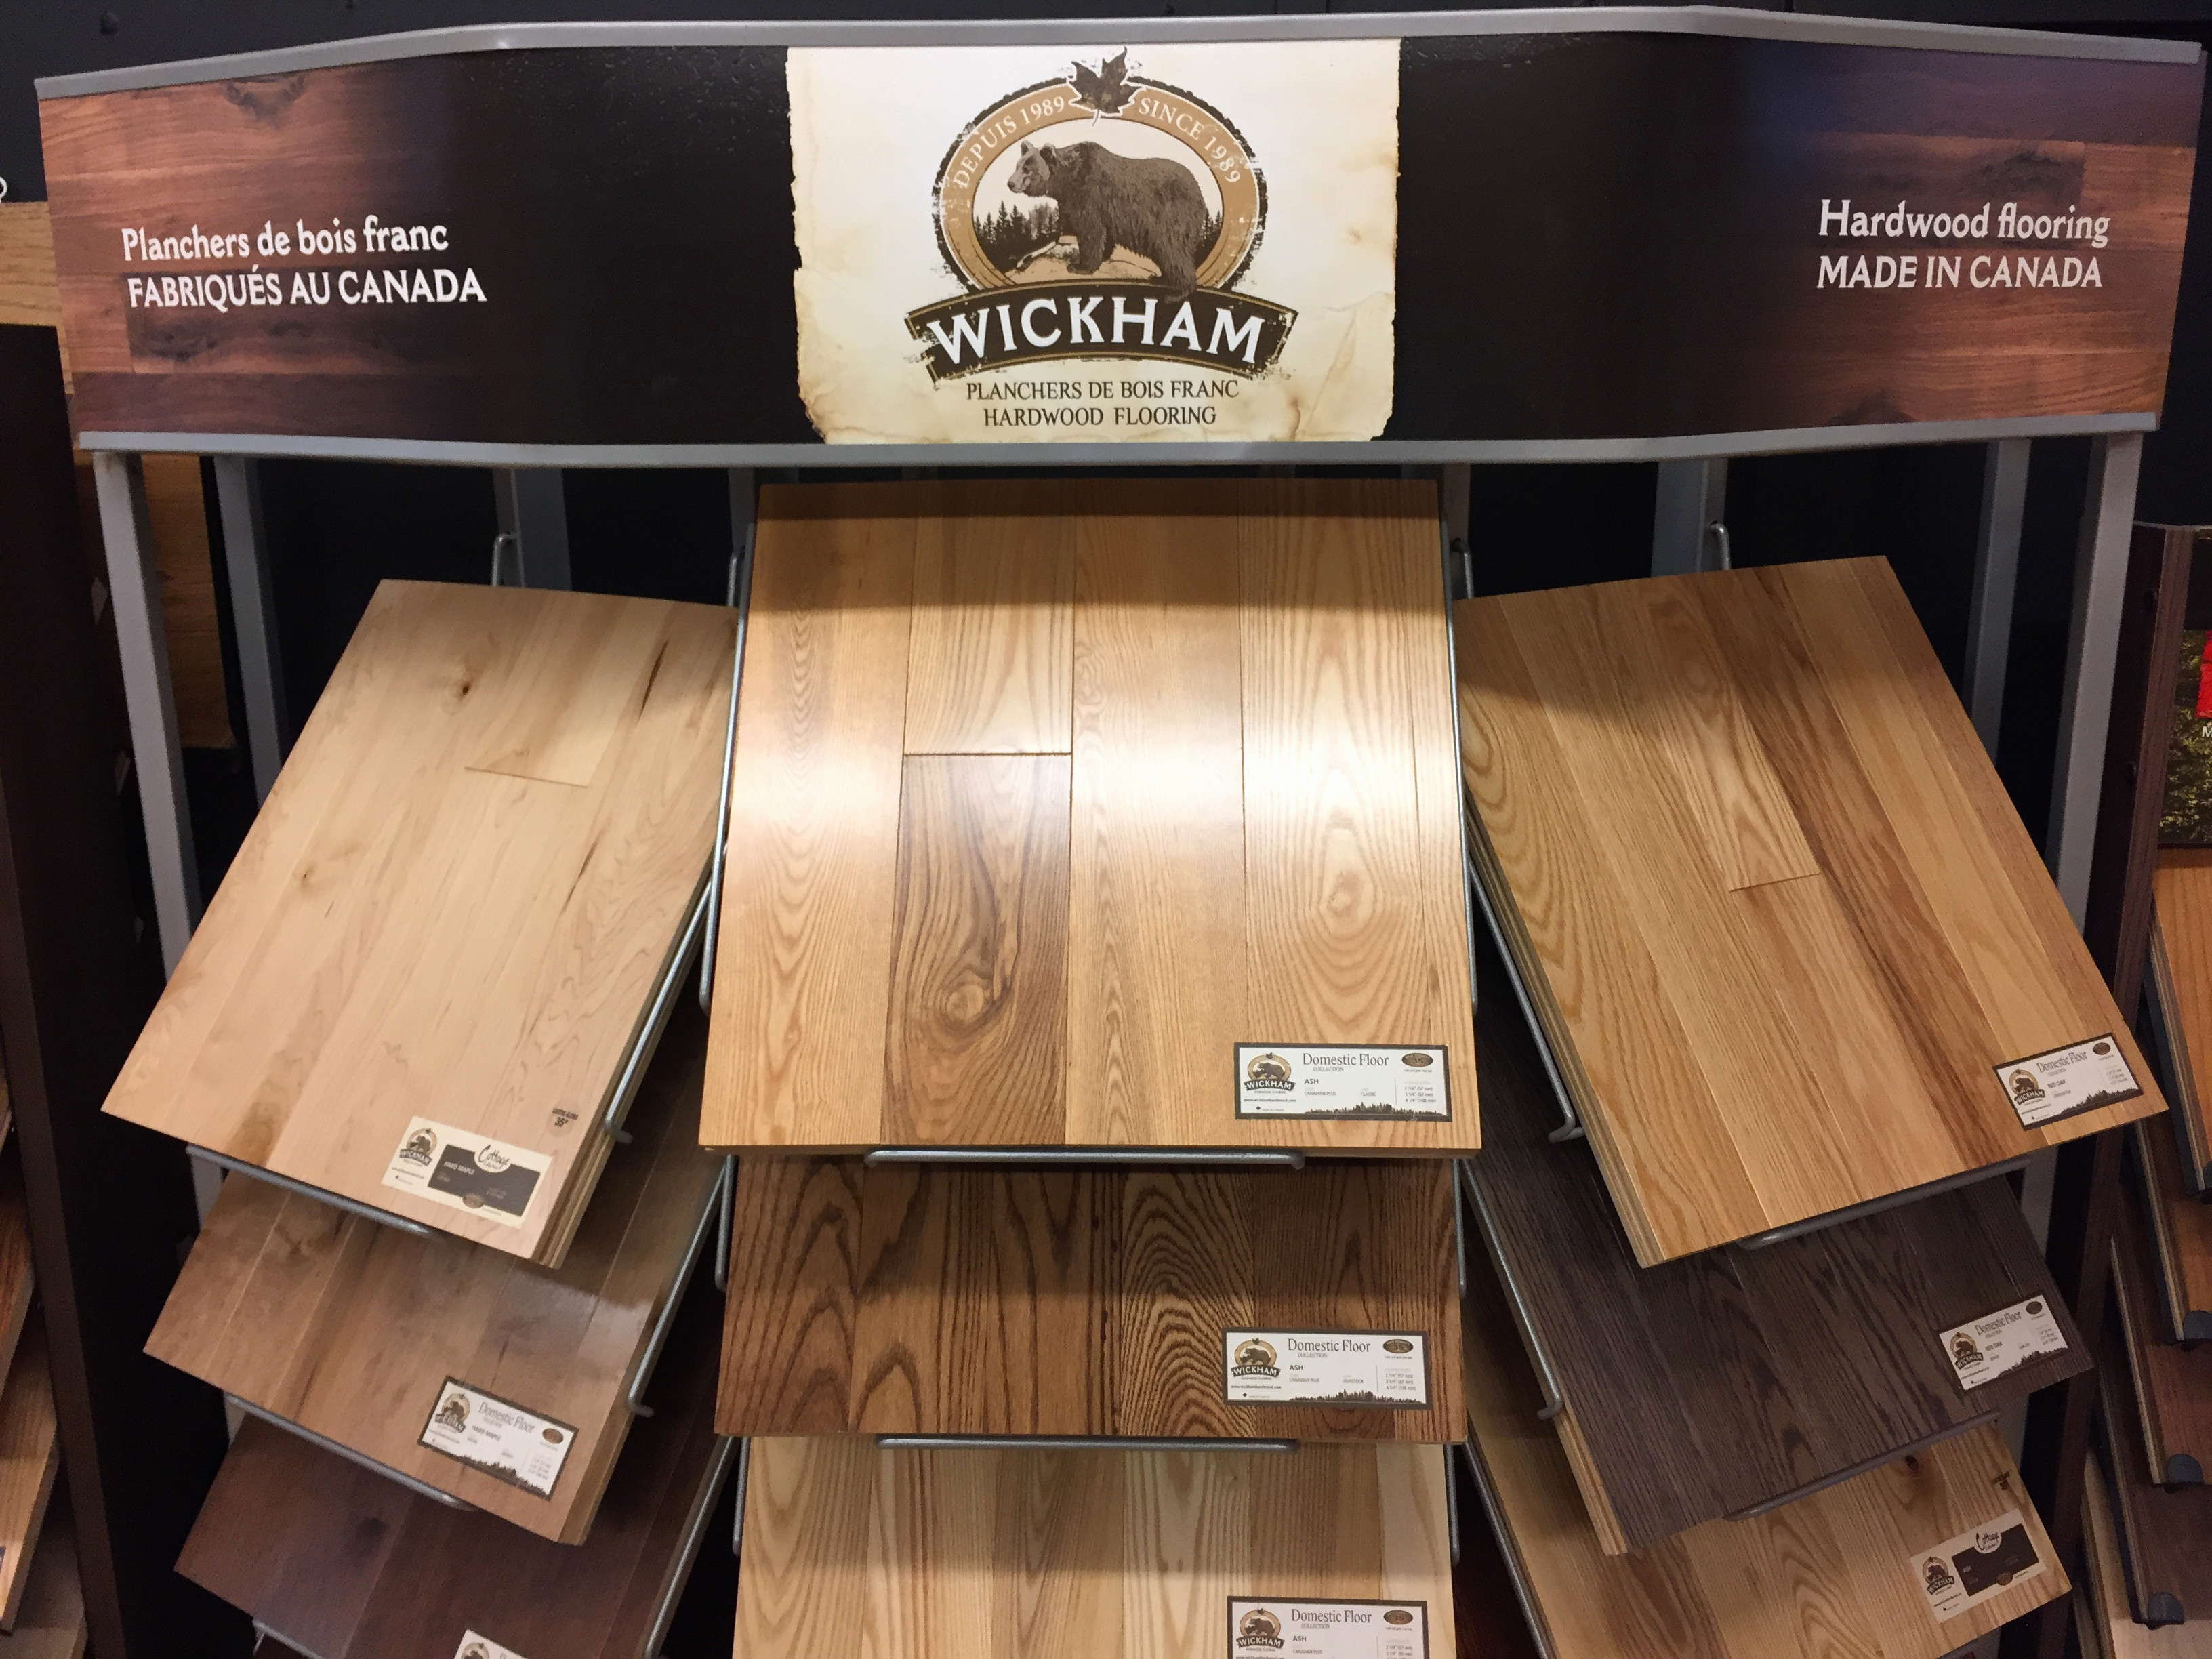 Wickham Hardwood Flooring Canada Of Fresh Wickham Hardwood Flooring Reviews Home Inspiration with Arteemark Part 63 Fresh Wickham Hardwood Flooring Reviews